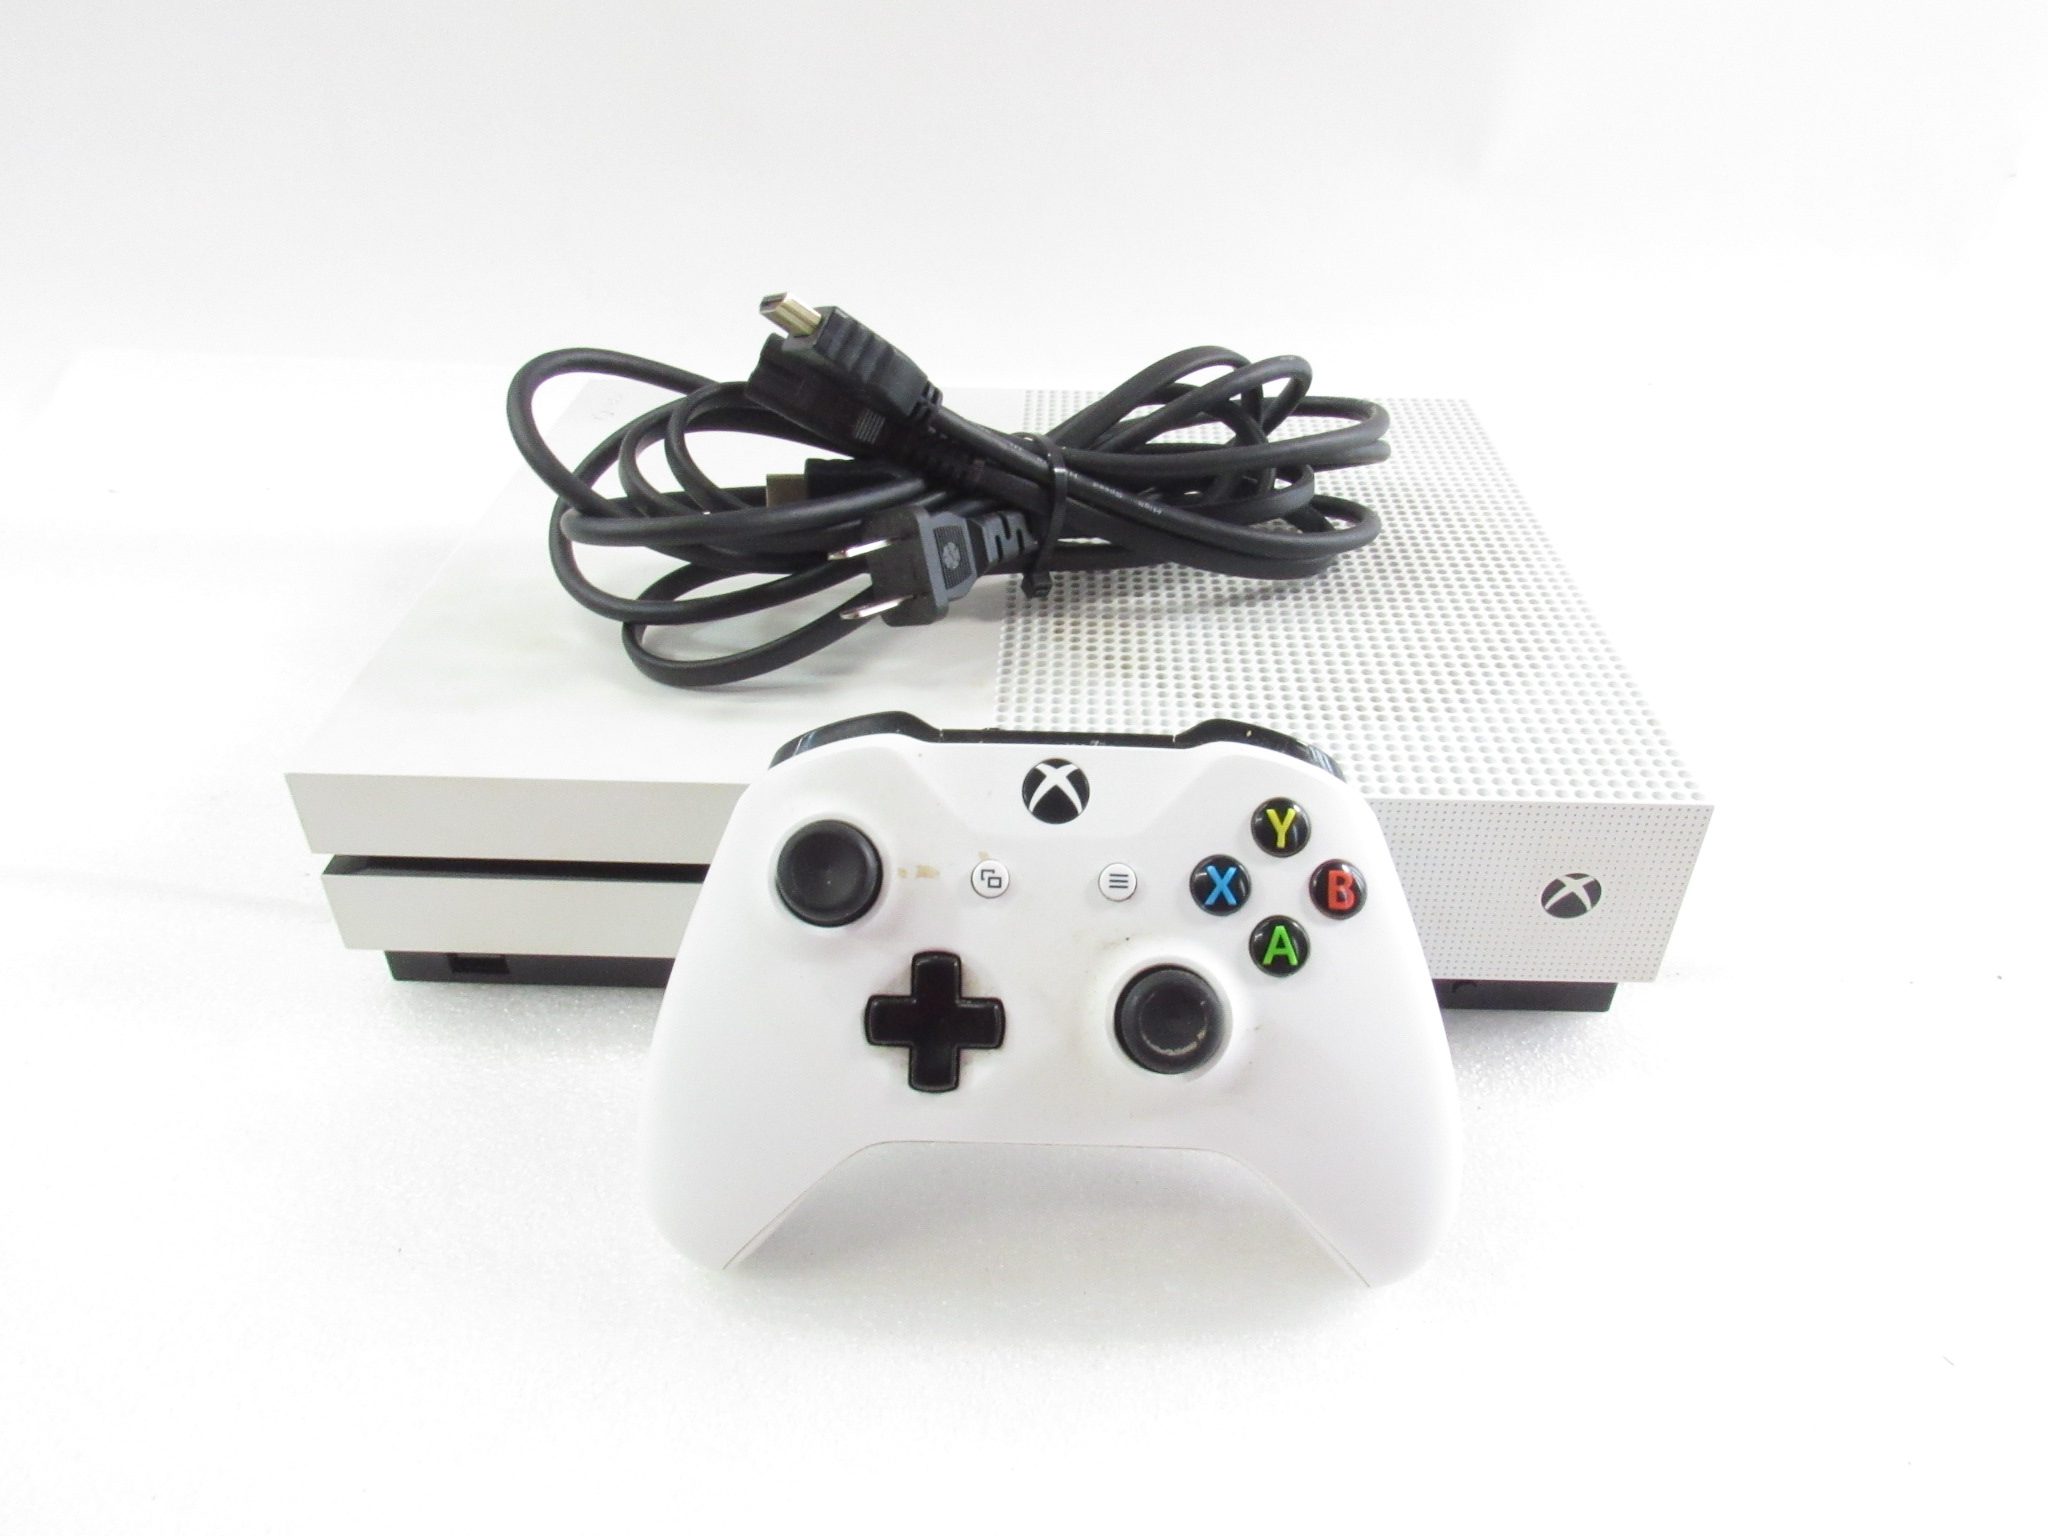 Consola de juegos de Microsoft Xbox Foto de stock 2295501689